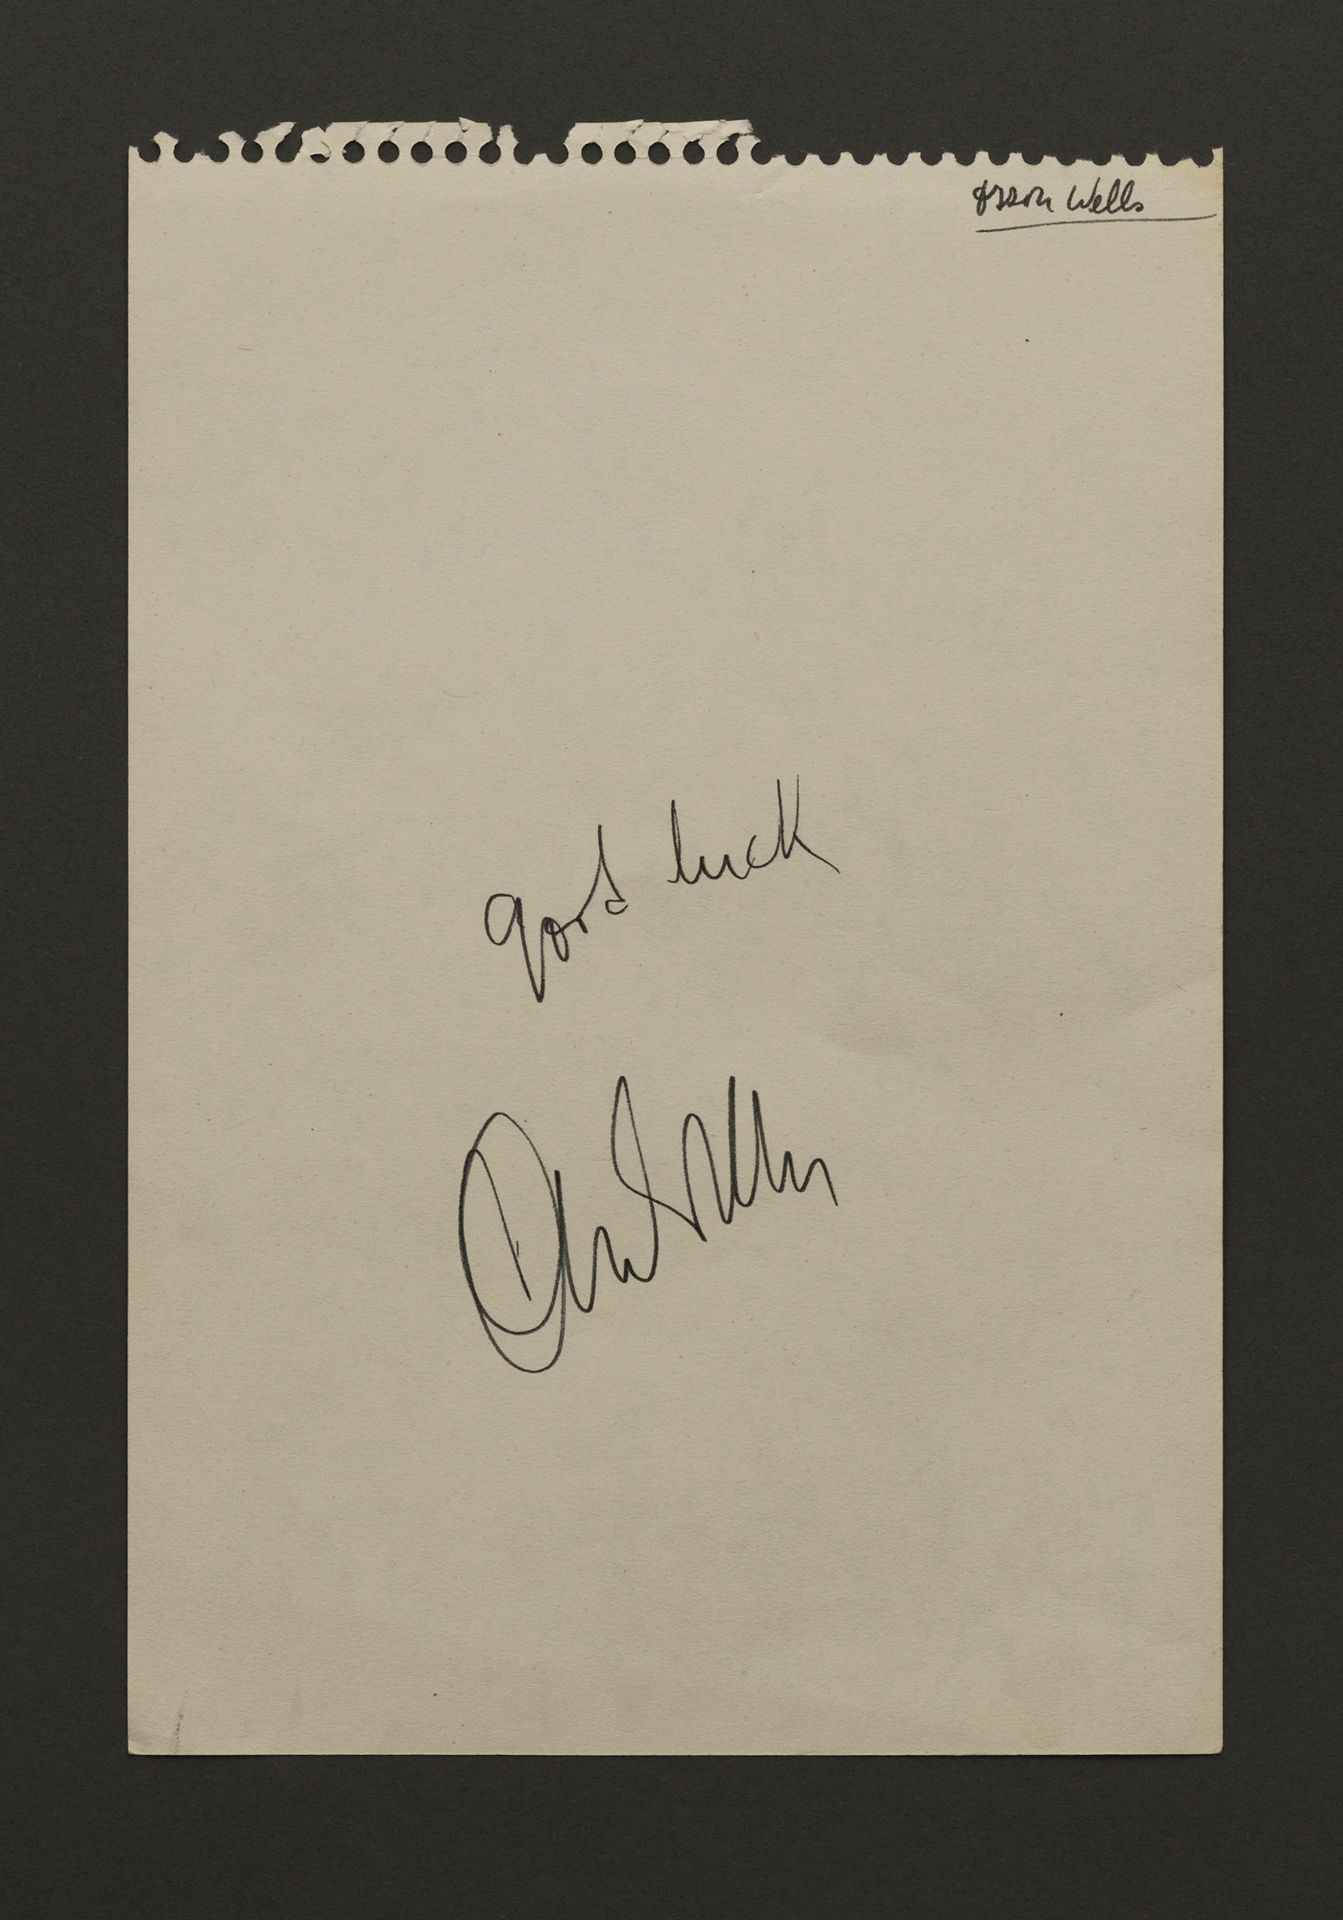 Orson WELLS Orson WELLS，演员、导演和制片人 - 自由纸上的献词 "好运" - 24 x 16 cm - 出处：Richard de Gr&hellip;